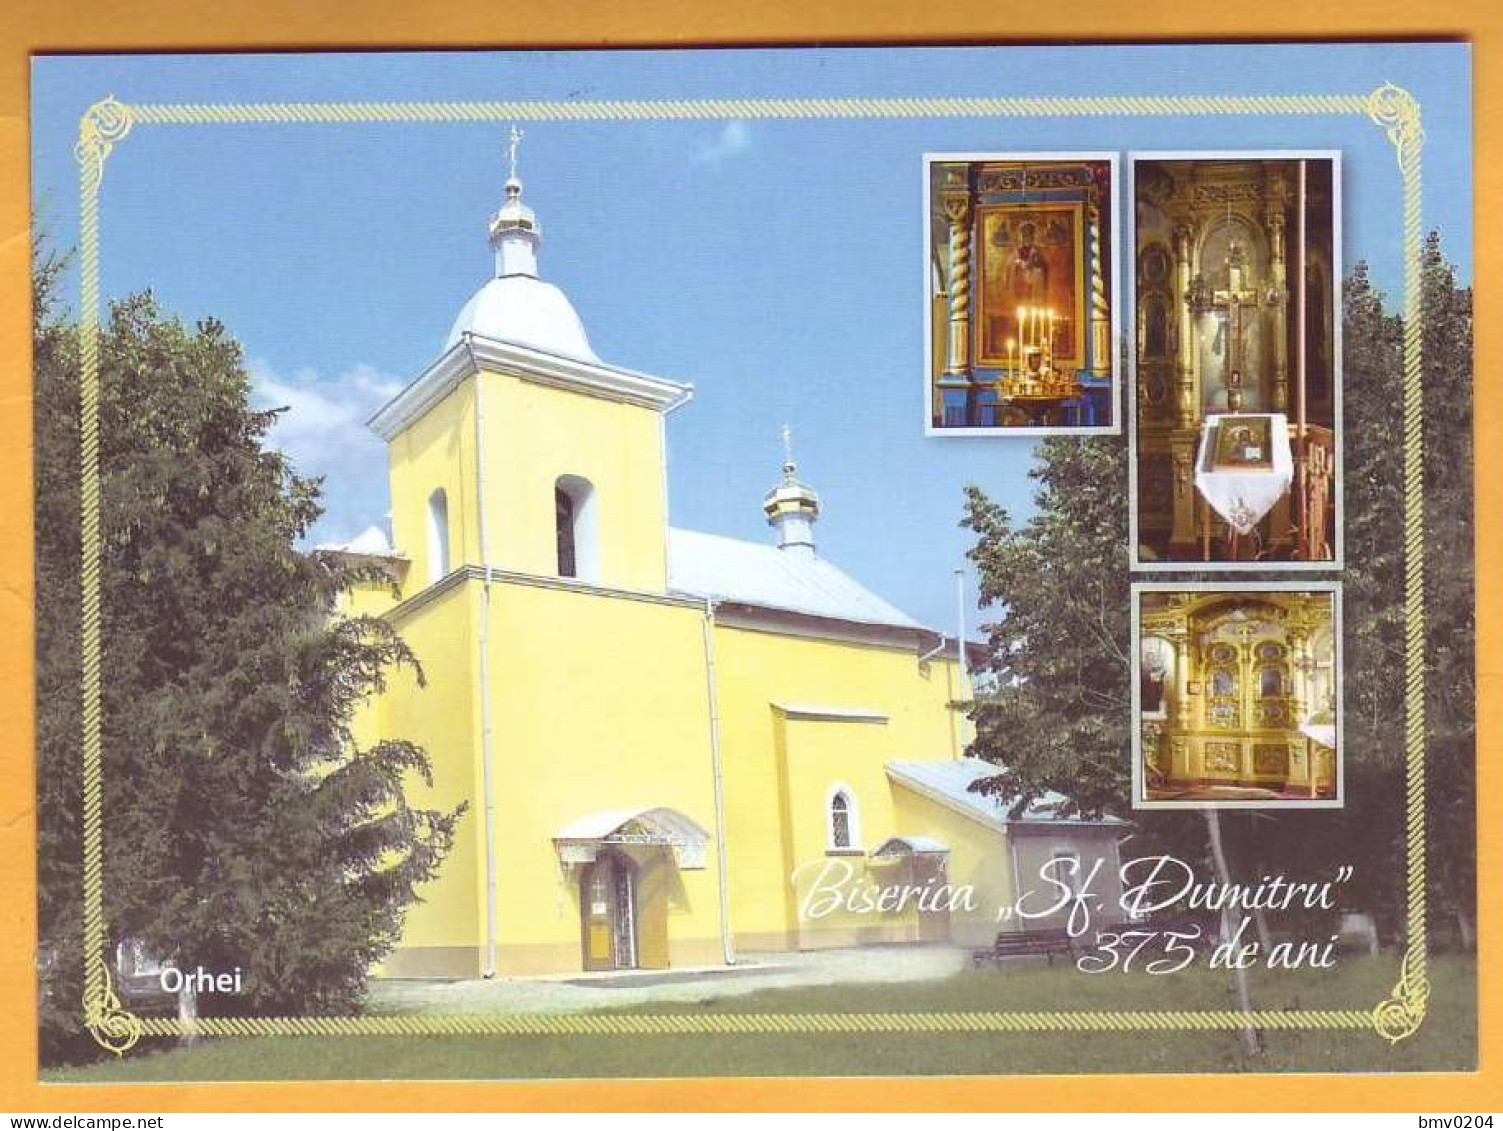 2011 Moldova Moldavie Moldau  FDC.   Orhei. Church. 375 Years. Postcard. - Eglises Et Cathédrales